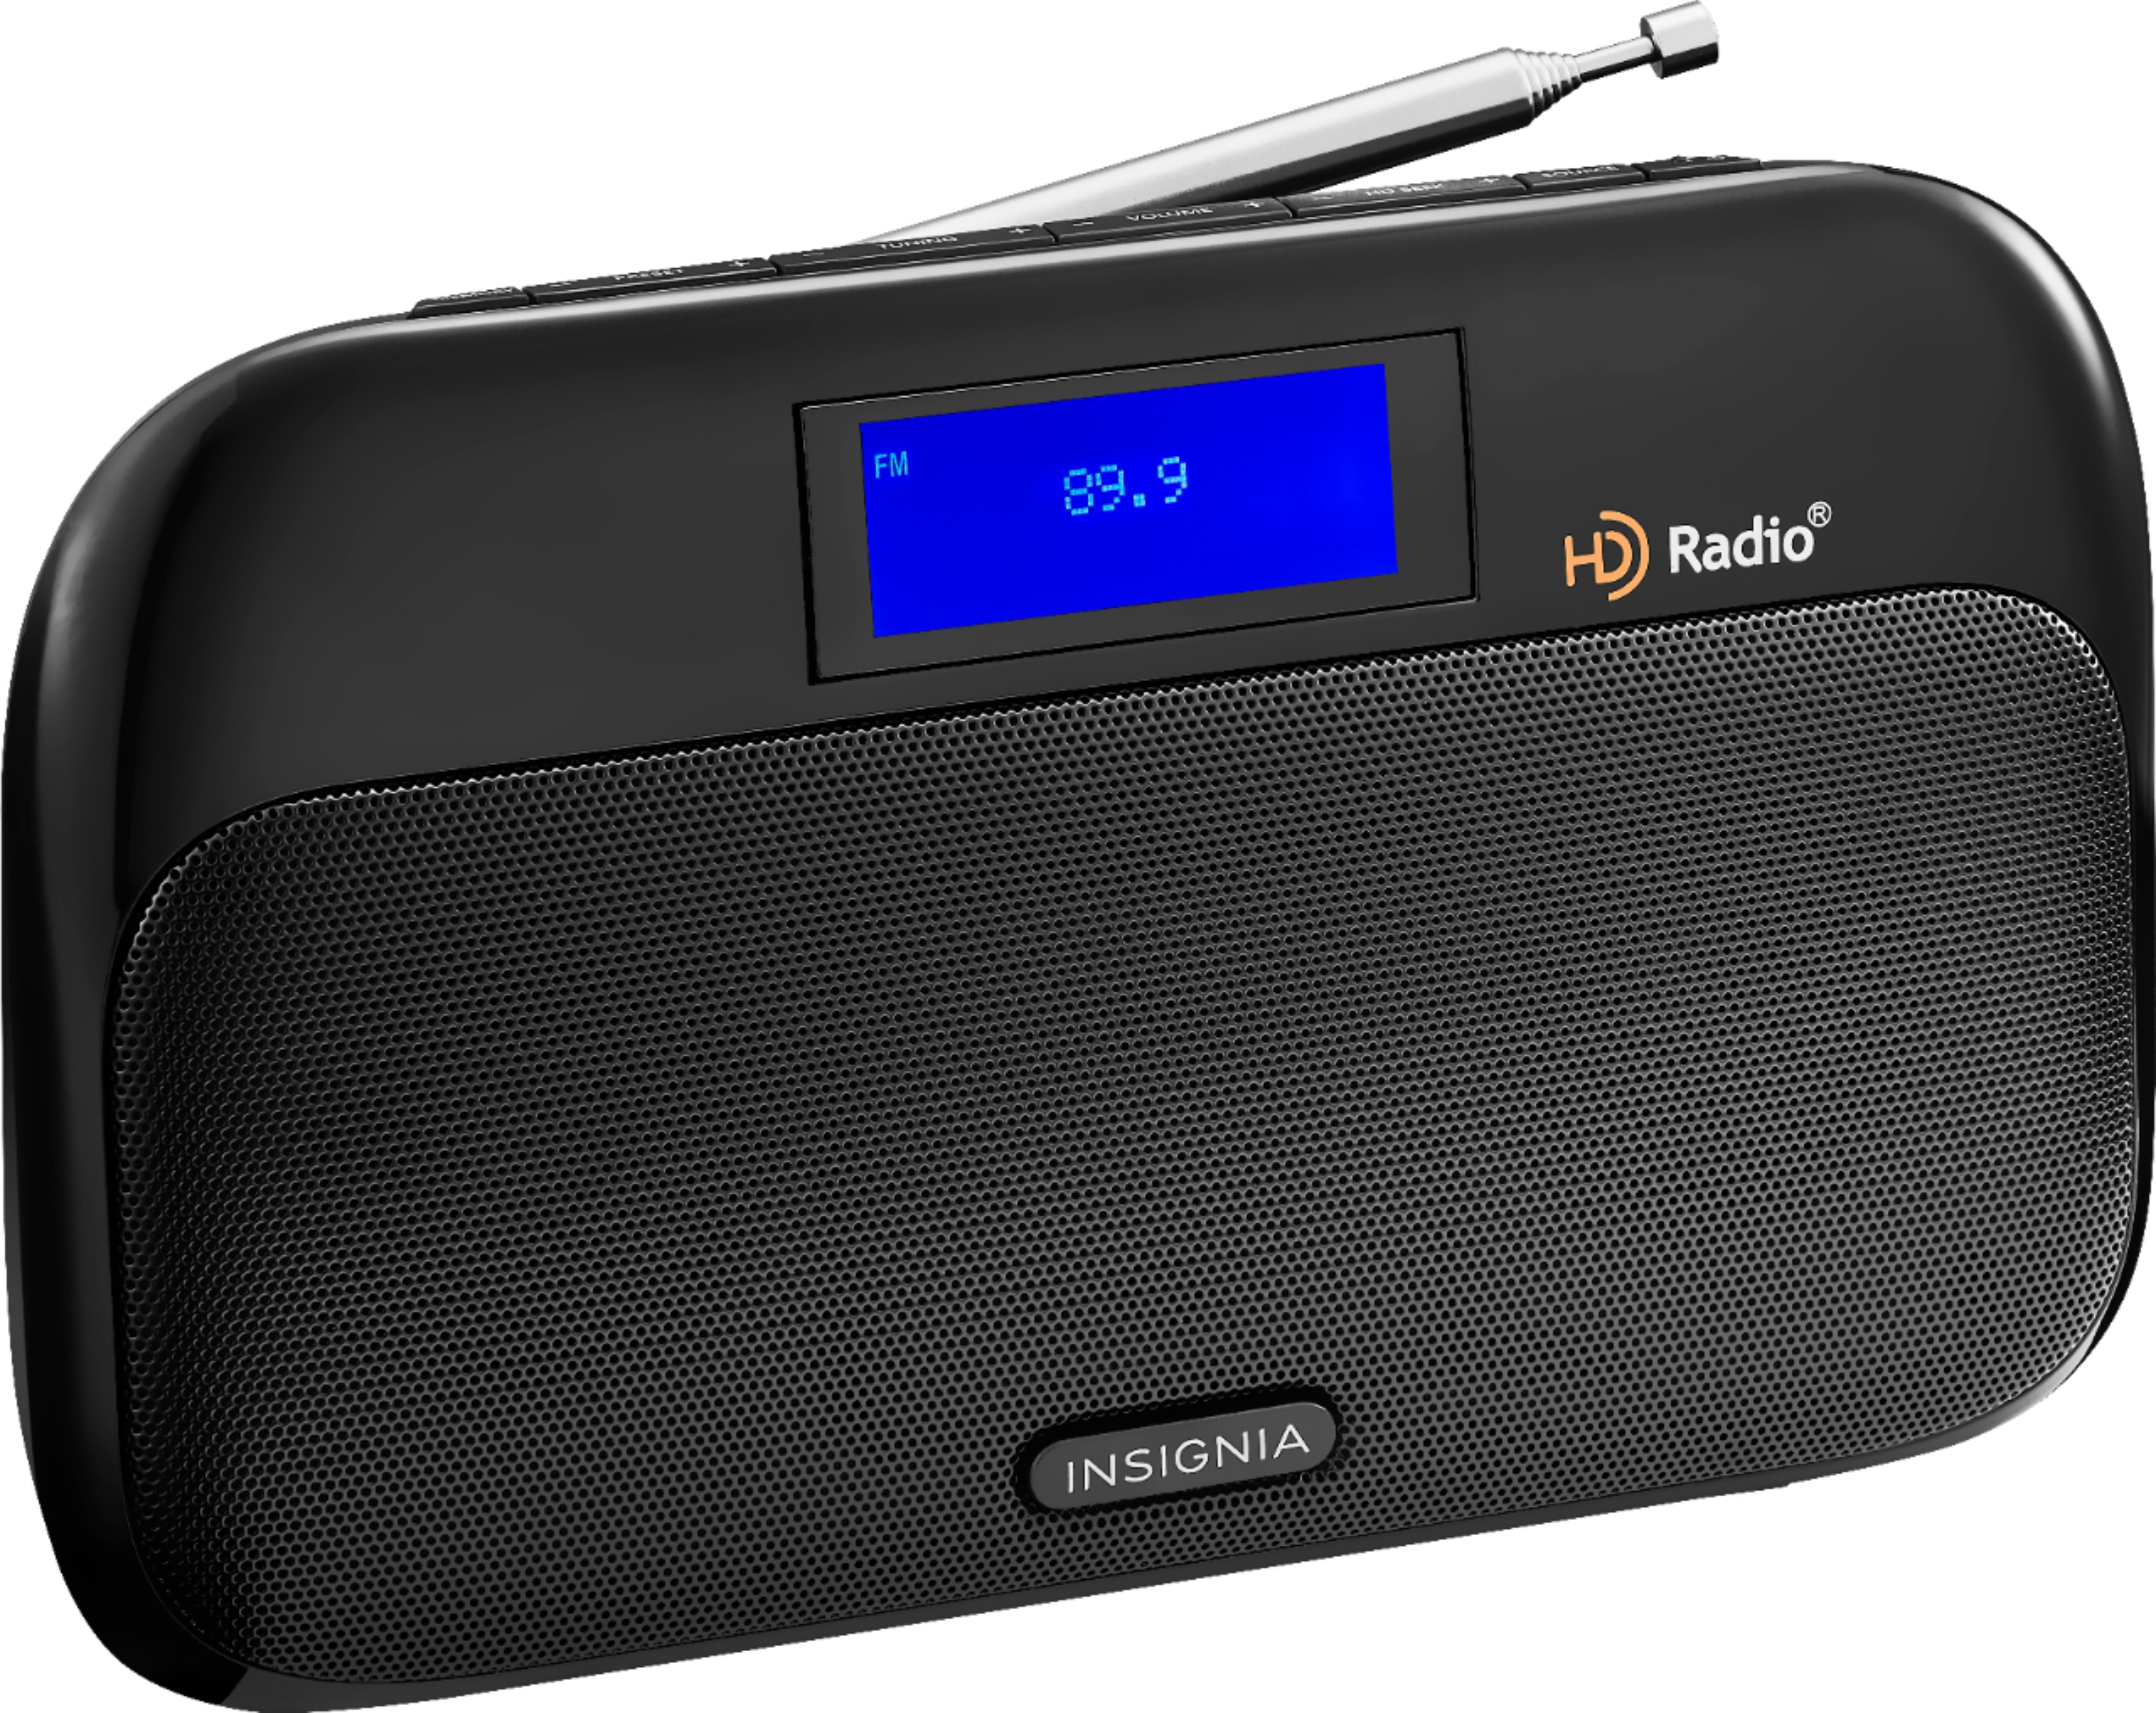 HD Radio - Extra Digital AM/FM Radio Stations in your Area 